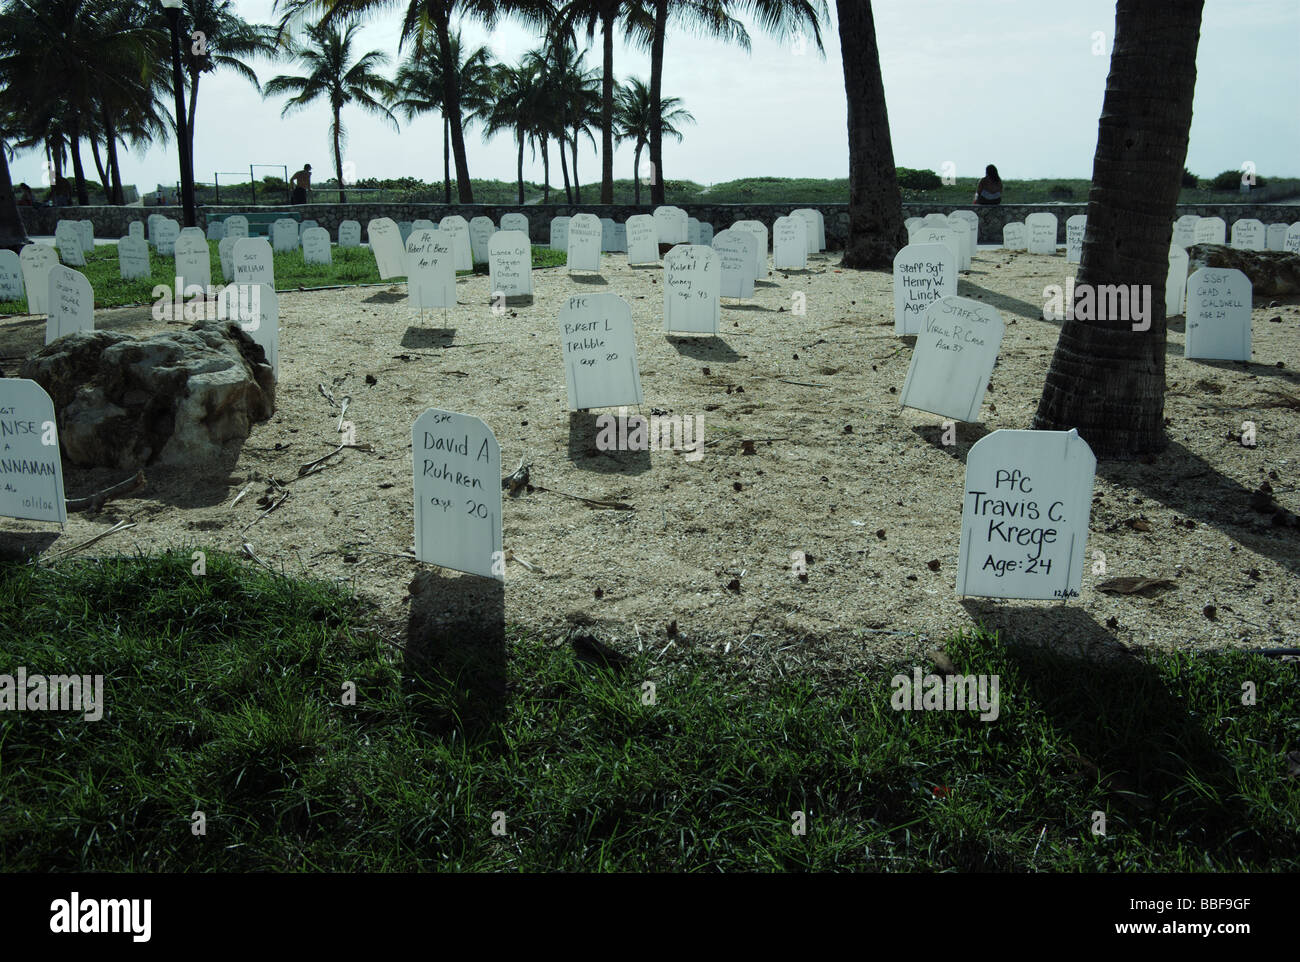 Symbolic Iraq War cemetery along the Ocean Drive in South Beach, Miami, FL, USA Stock Photo